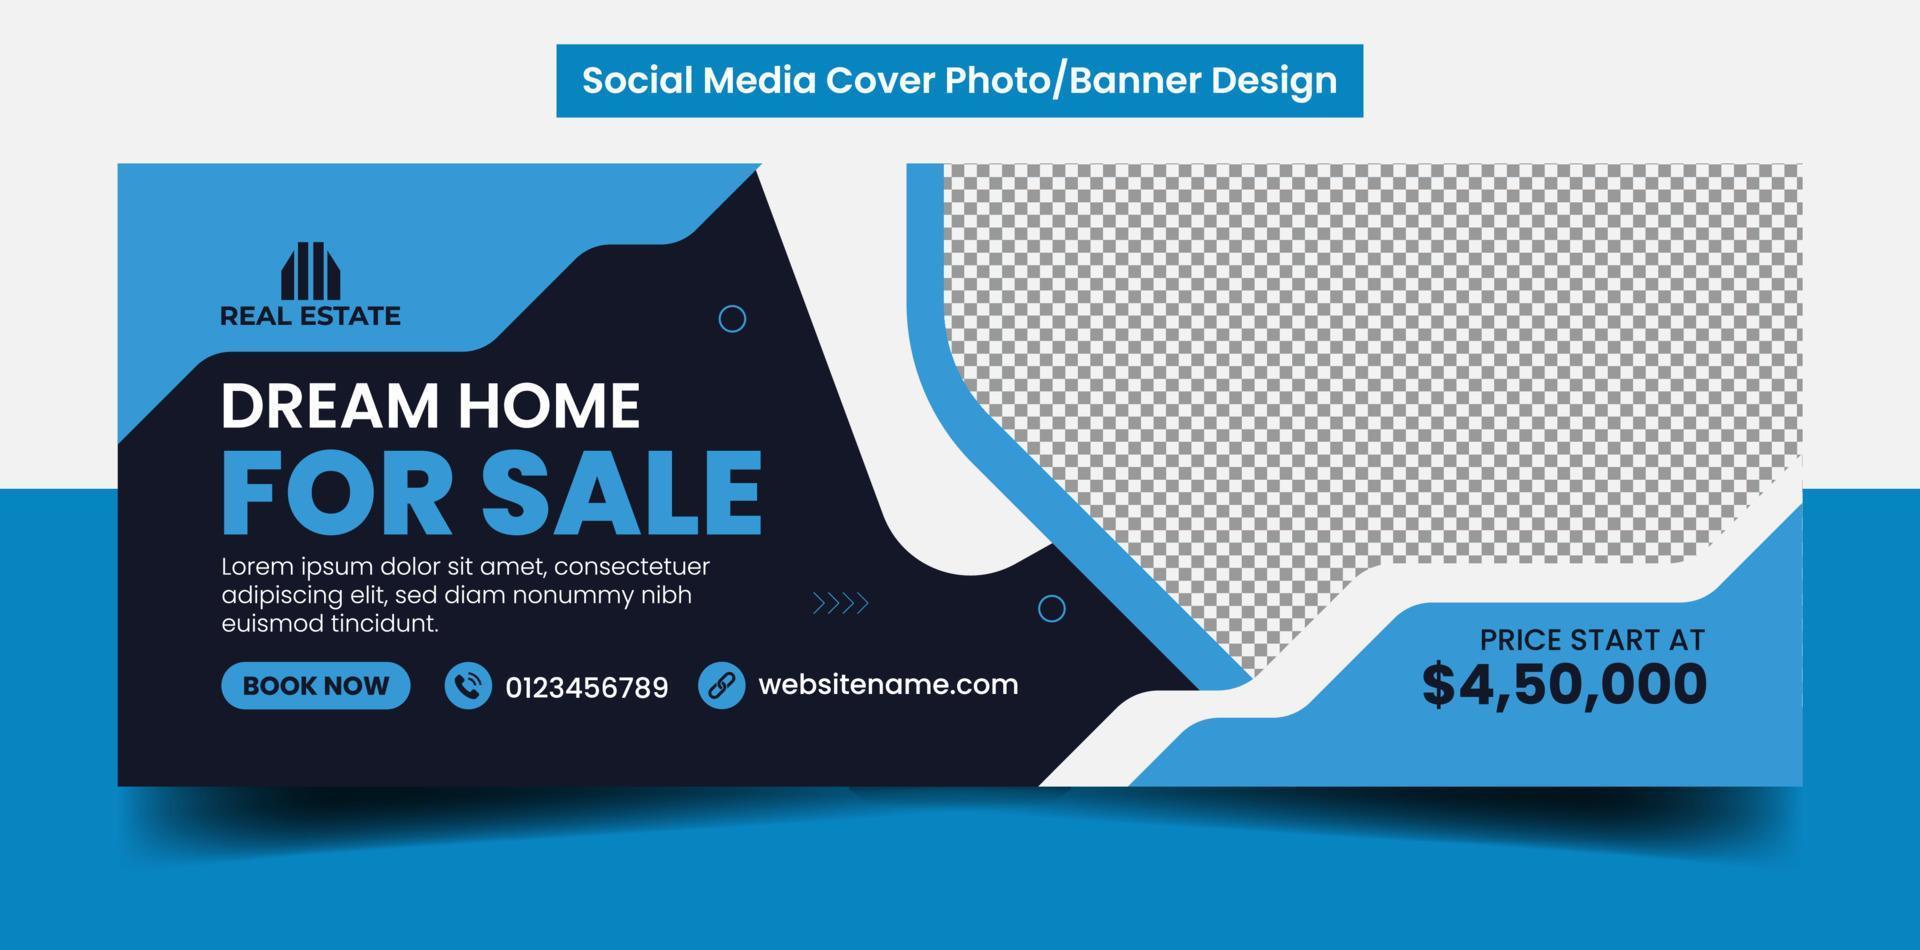 casa dos sonhos para venda capa de mídia social imobiliária e modelo de design de banner da web vetor